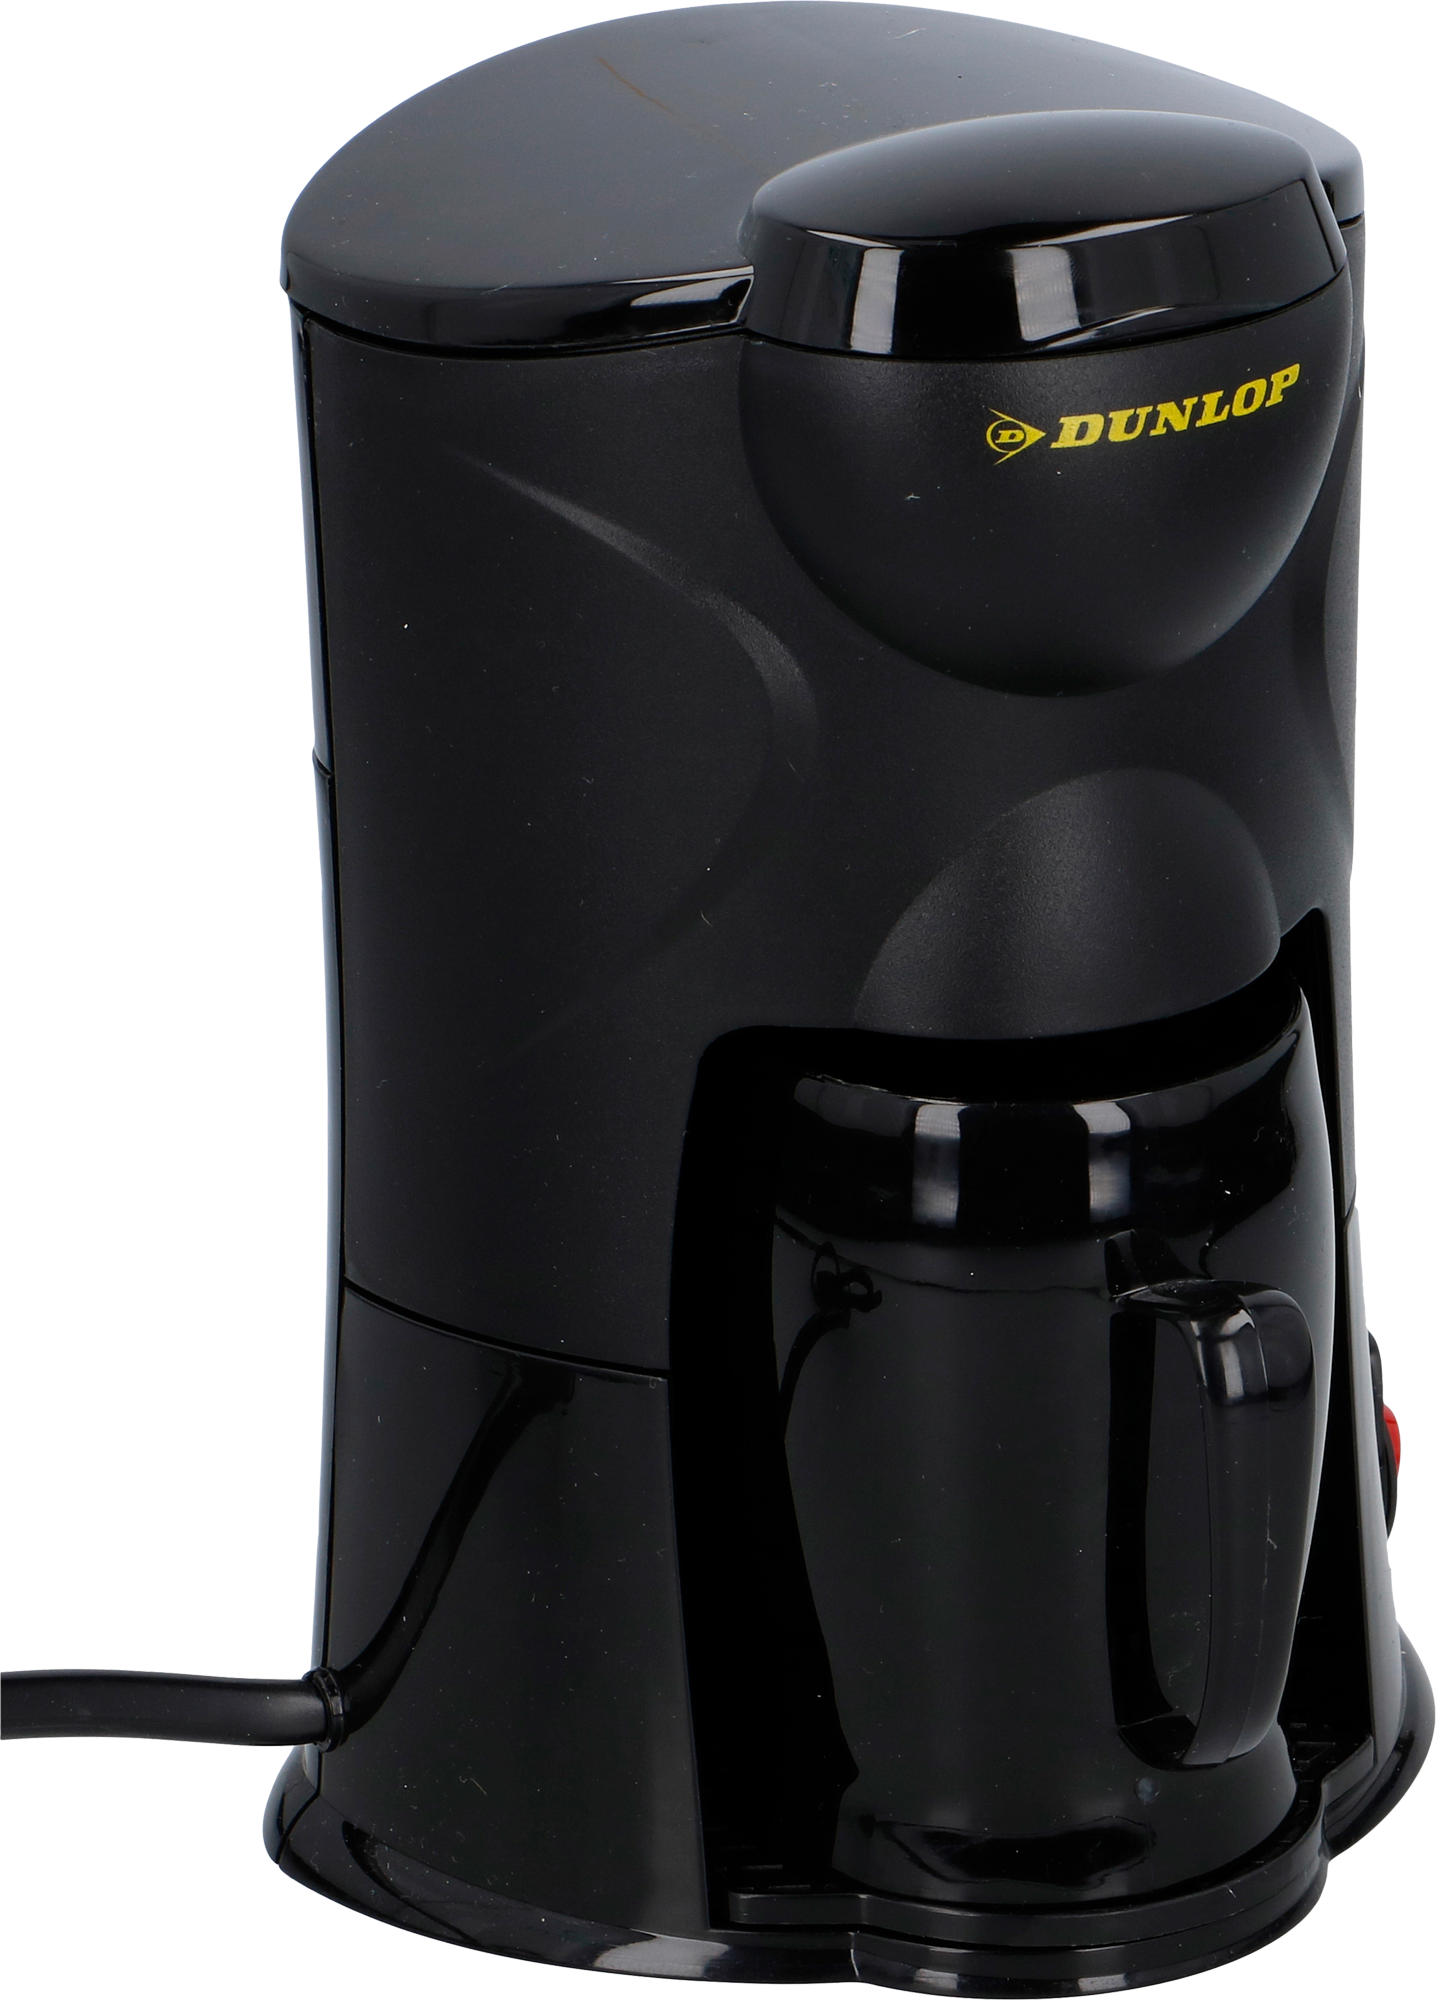 Dunlop Kaffeemaschine 12 V schwarz